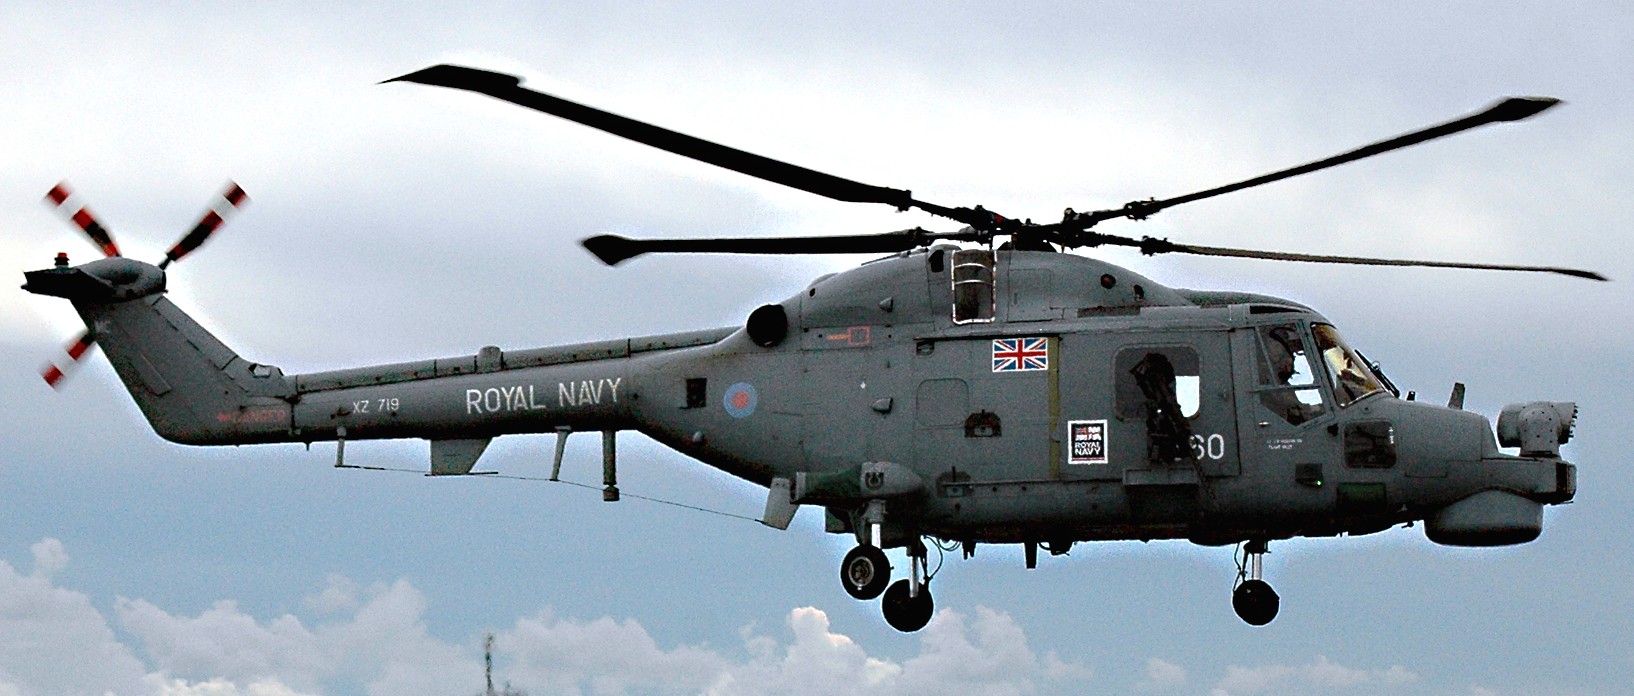 lynx hma.8 naval helicopter royal navy westland nas squadron rnas 05